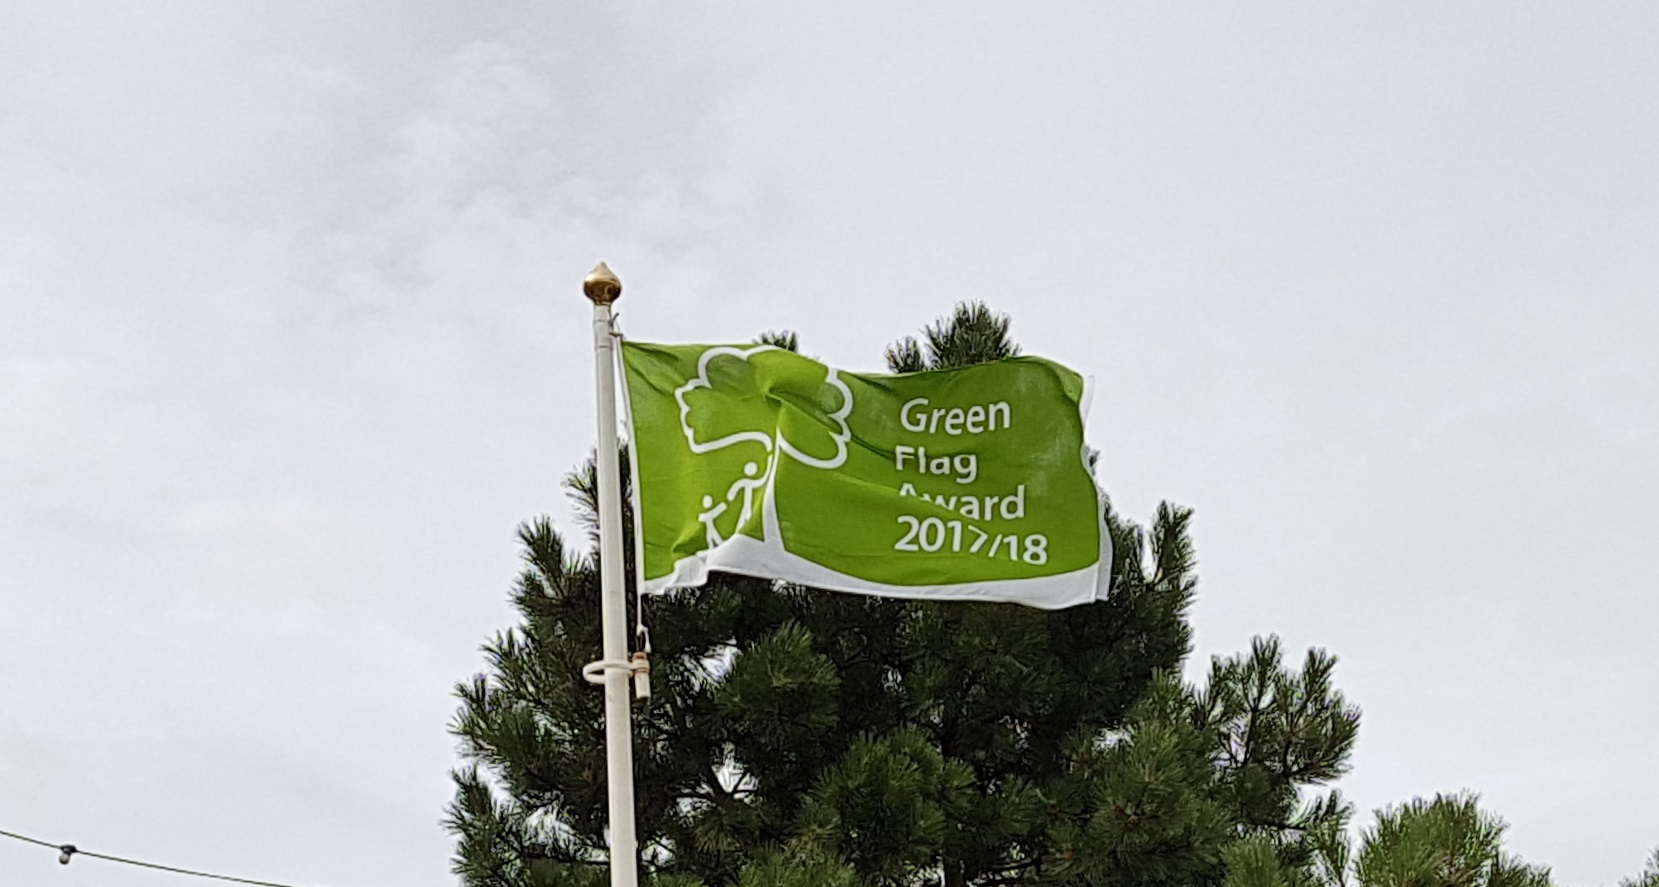 Green Flag 2017/18